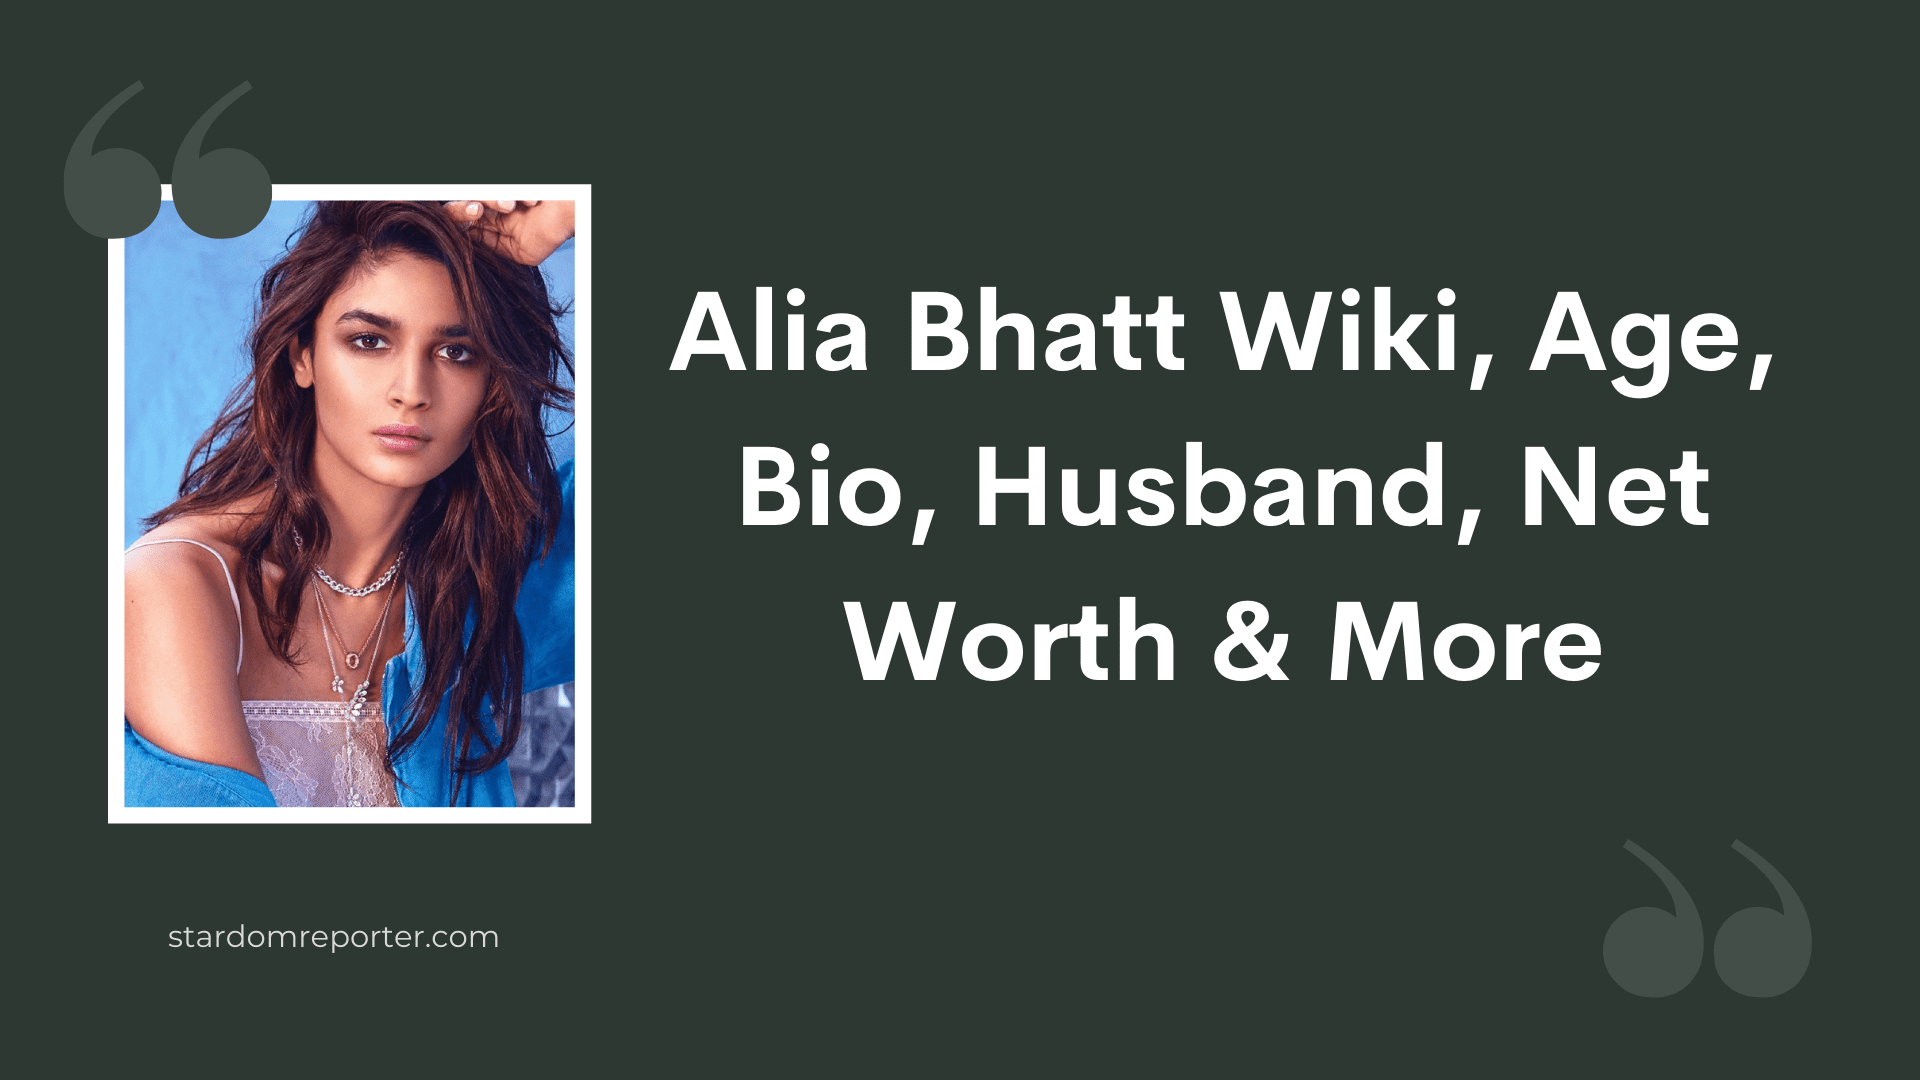 Alia Bhatt Wiki, Age, Bio, Husband, Net Worth & More - 21